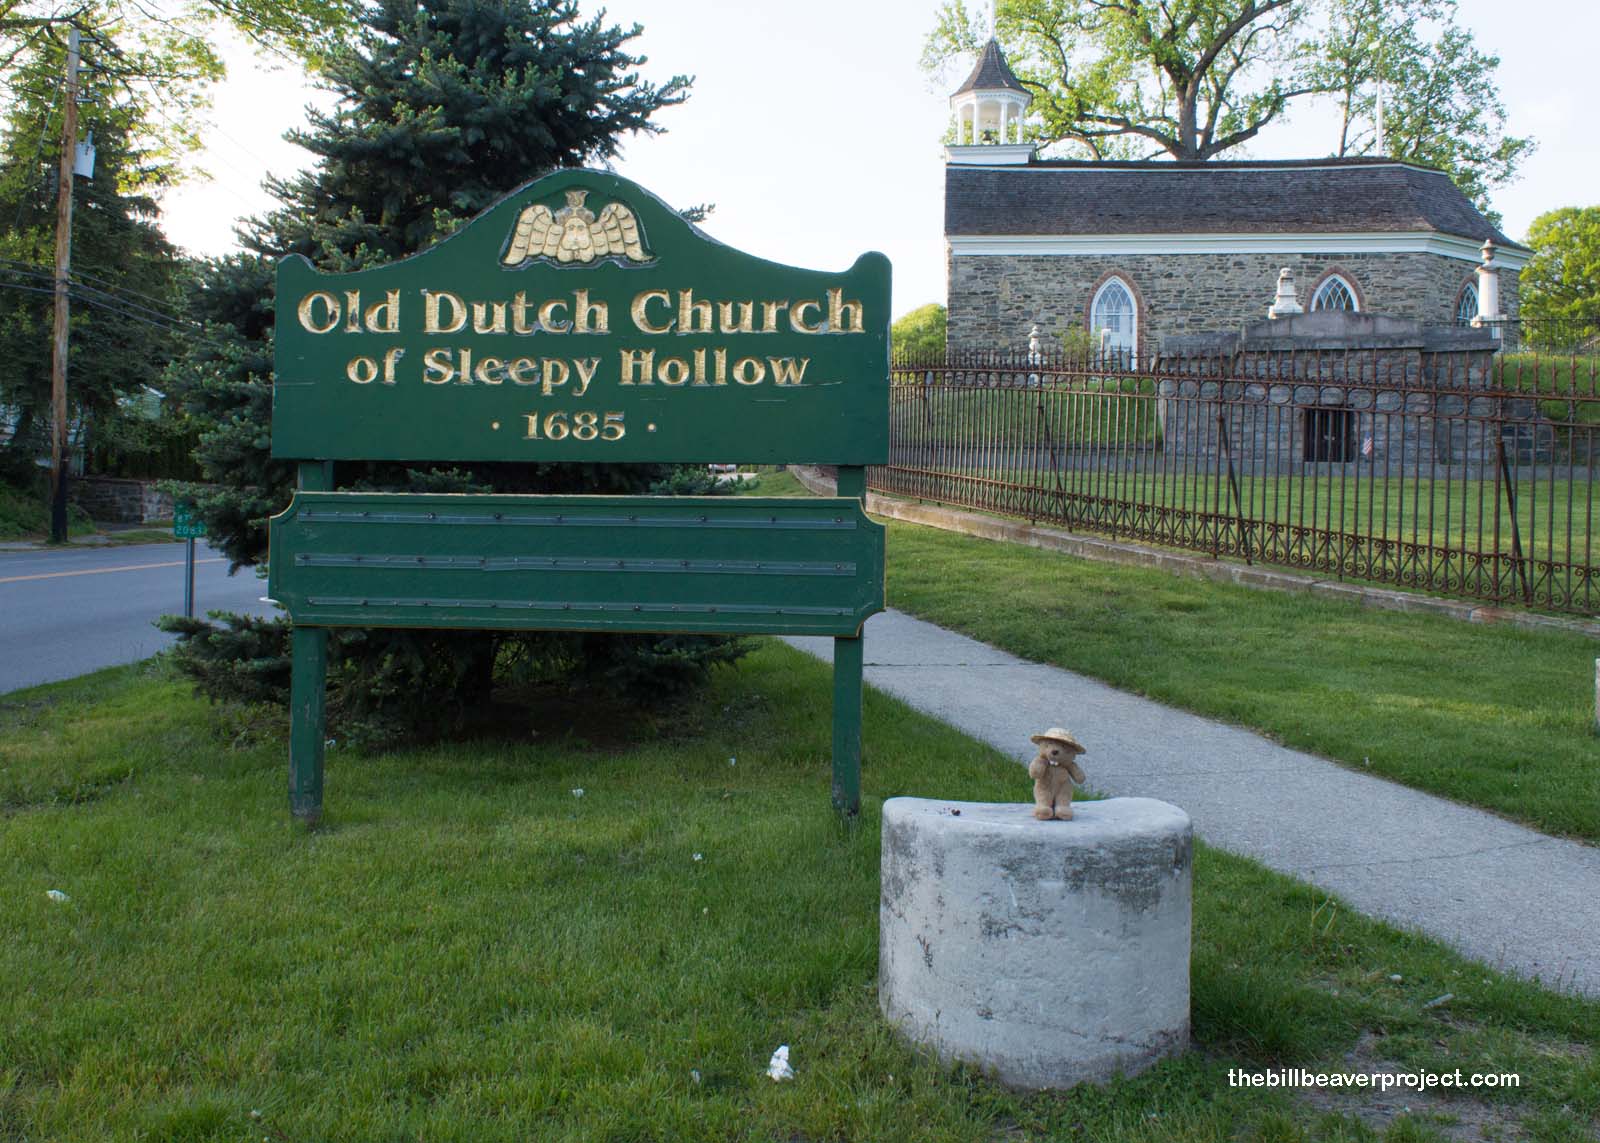 Old Dutch Church of Sleepy Hollow